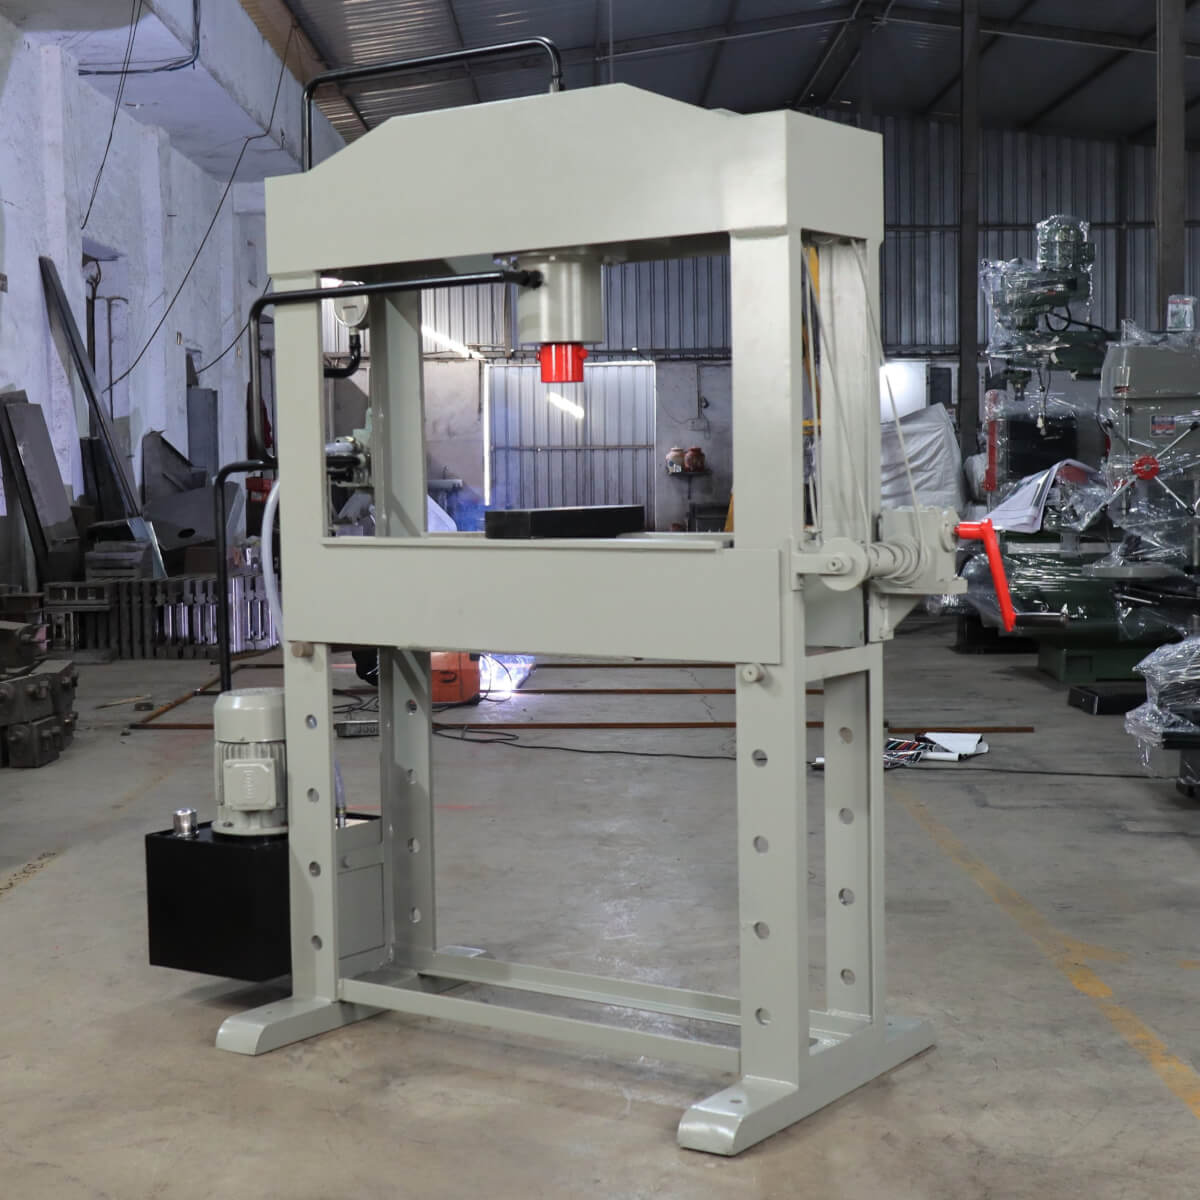 Hydraulic Press Machine - Cylinder Machine - Pillar Type - Stand Press -  Hand Press Manual - Punching - 5 Ton Capacity